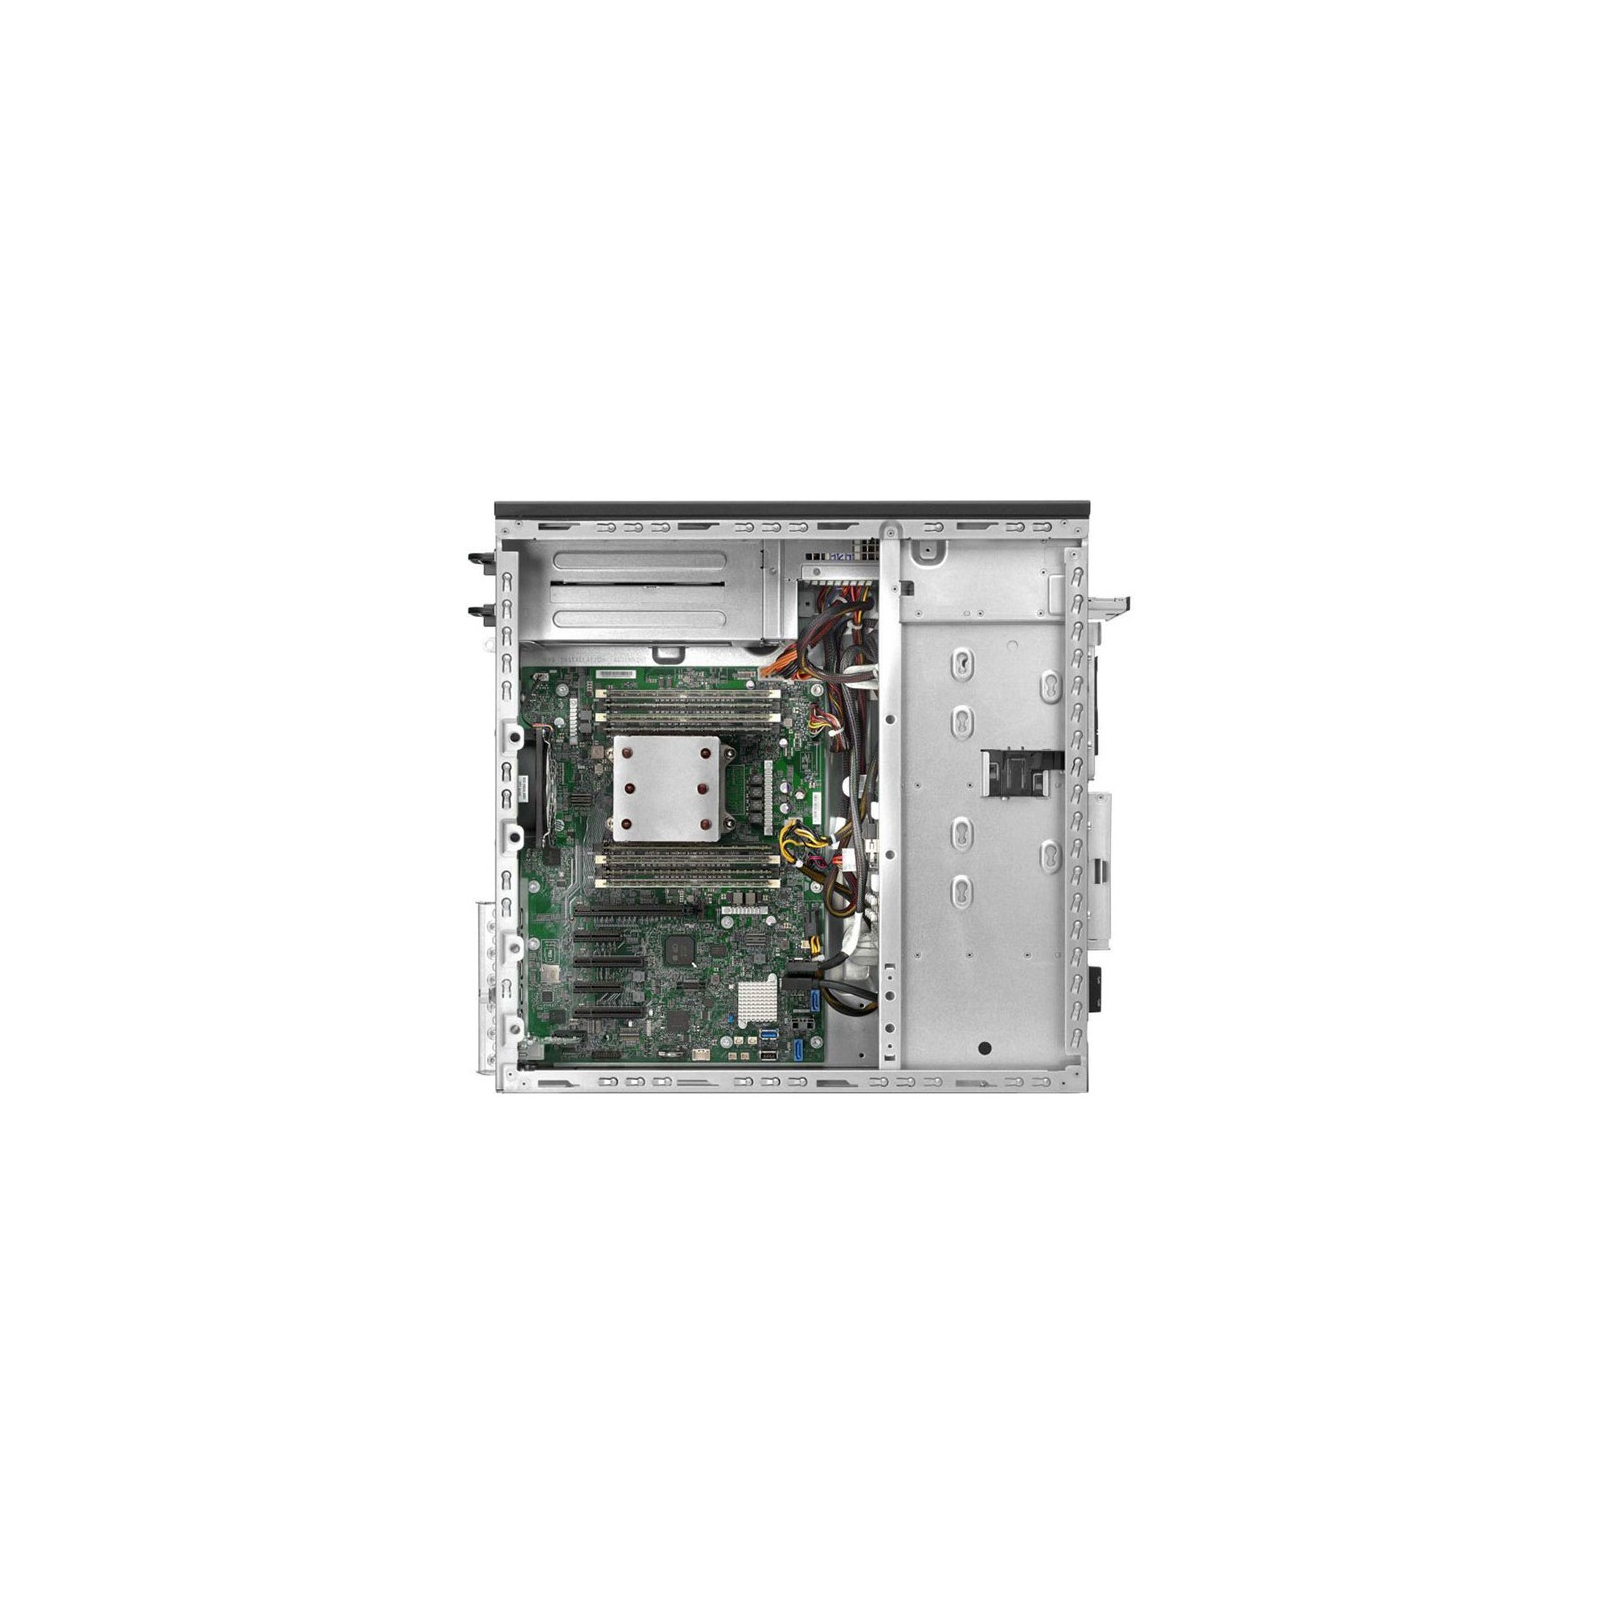 Сервер Hewlett Packard Enterprise ML 110 Gen9 (837826-521) изображение 3